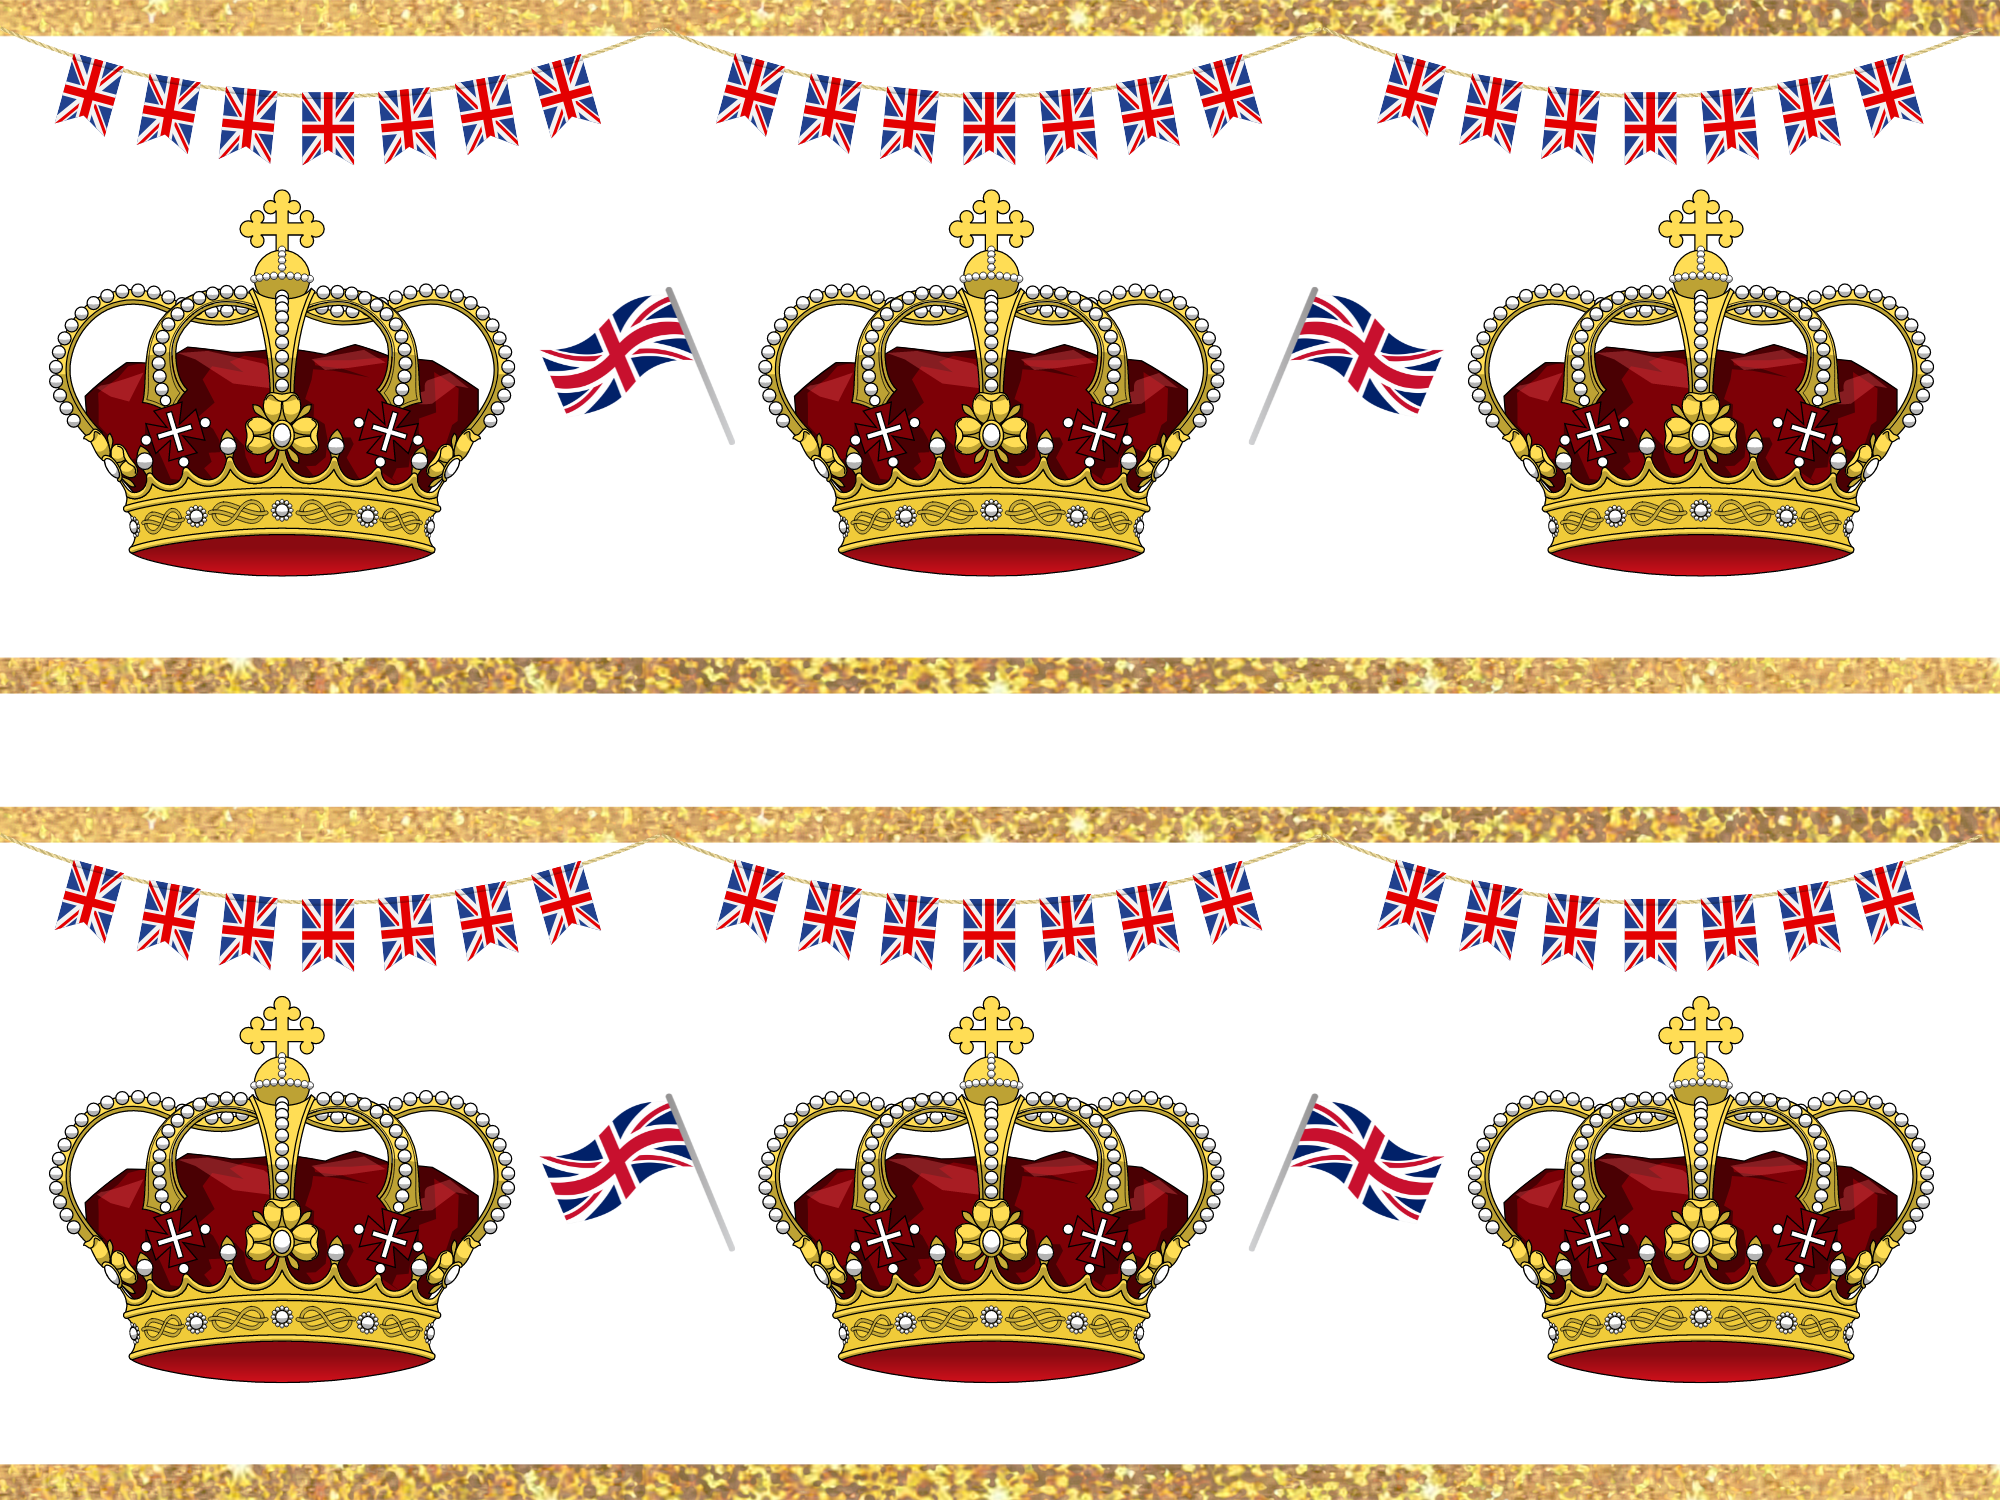 King Charles II King's Coronation Party Celebration Ribbon Border Edible Printed Icing Sheet Cake Topper